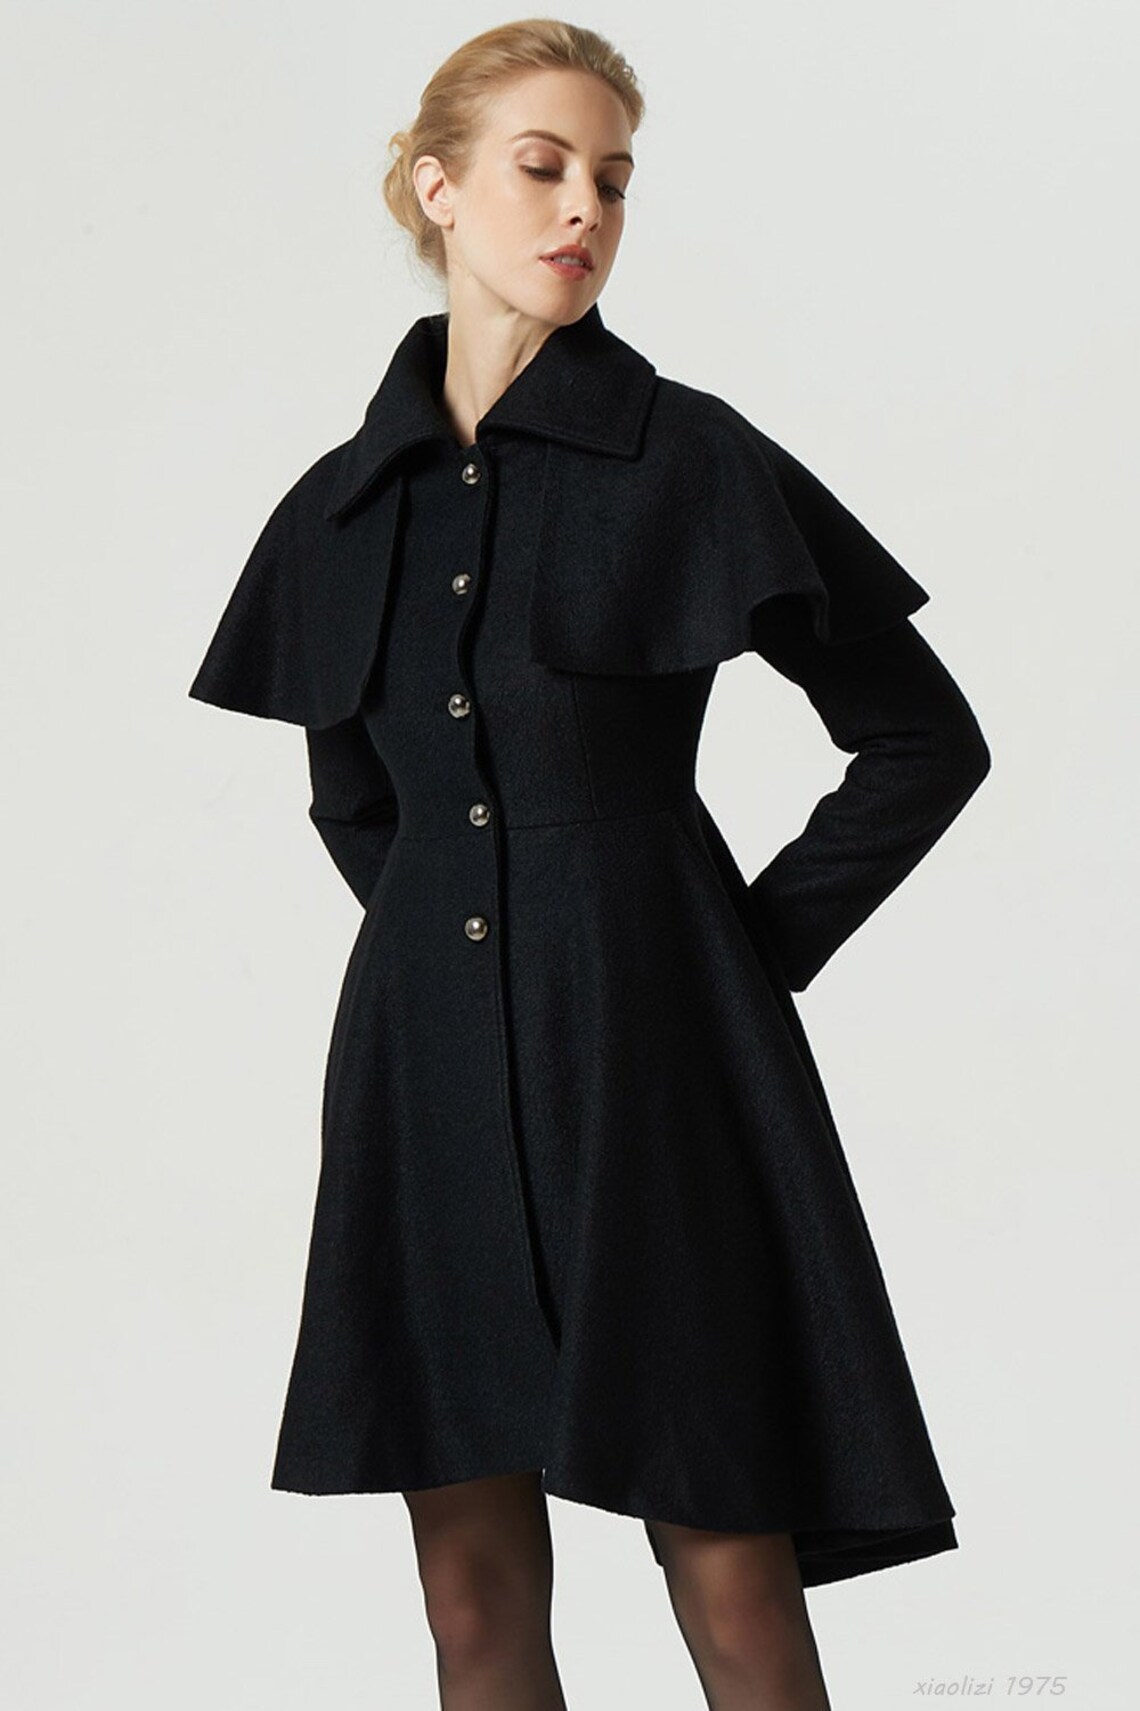 black wool coat womens capelet coat swing coat winter | Etsy